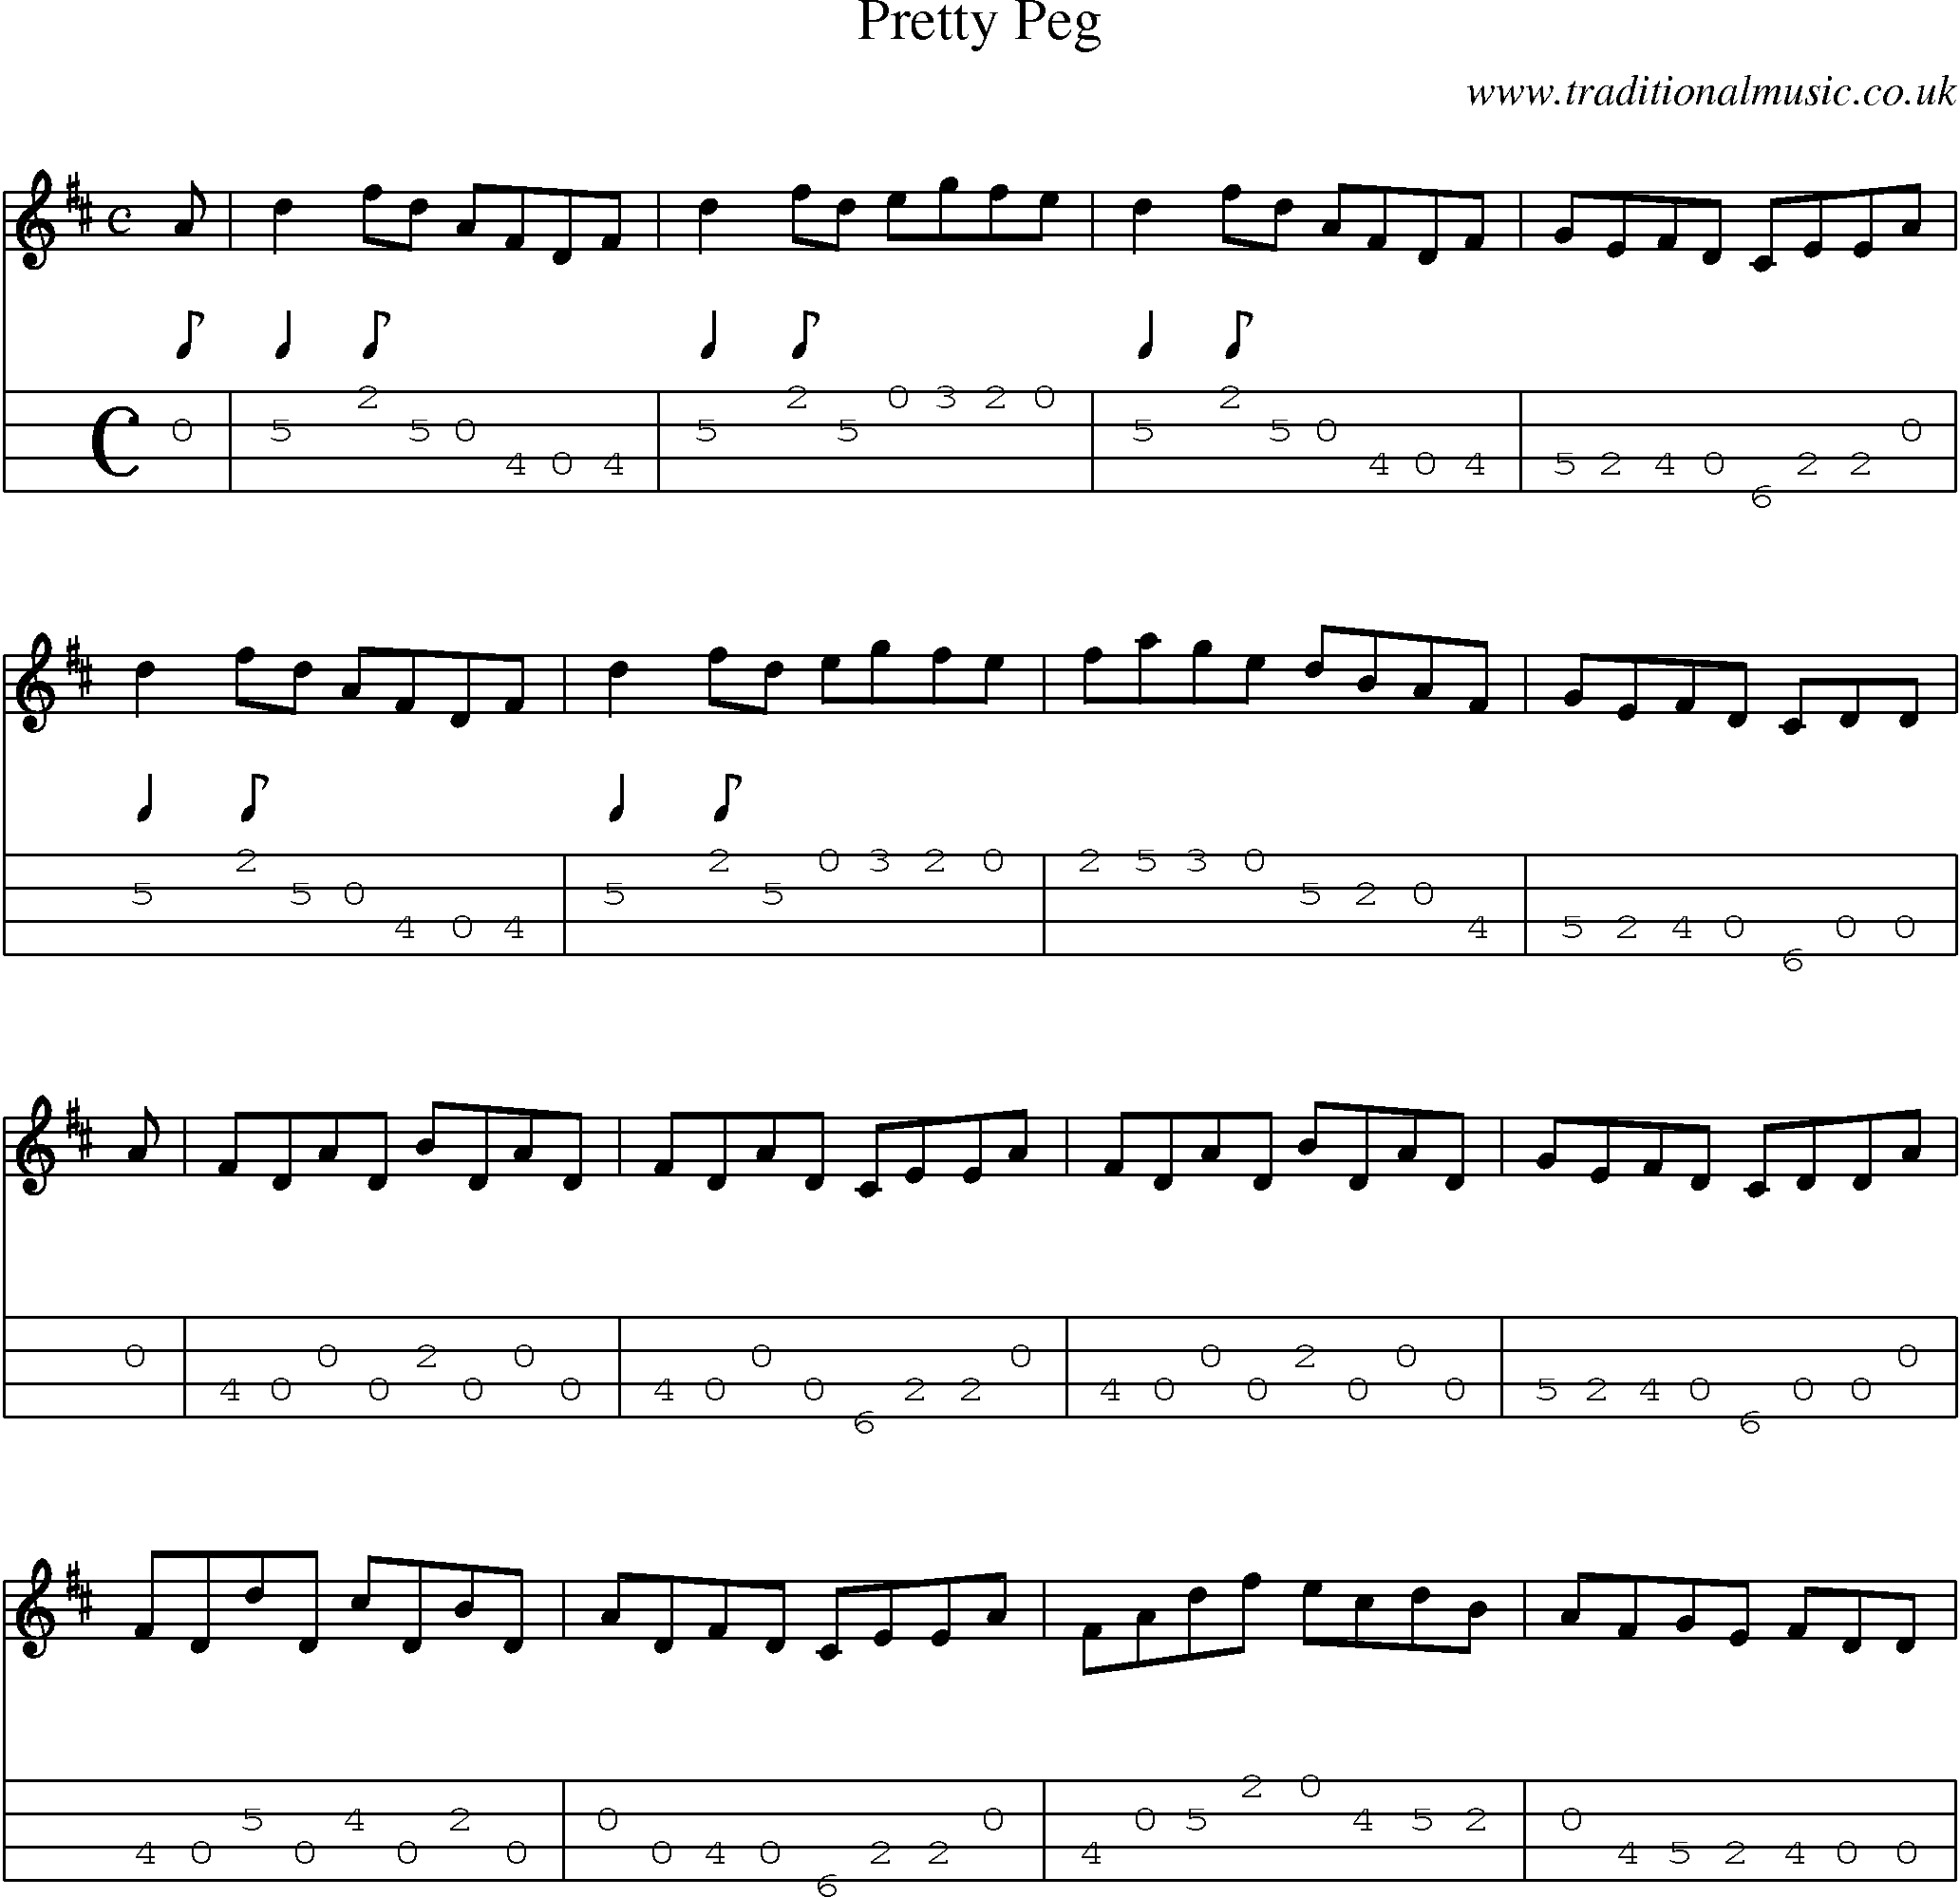 Music Score and Mandolin Tabs for Pretty Peg